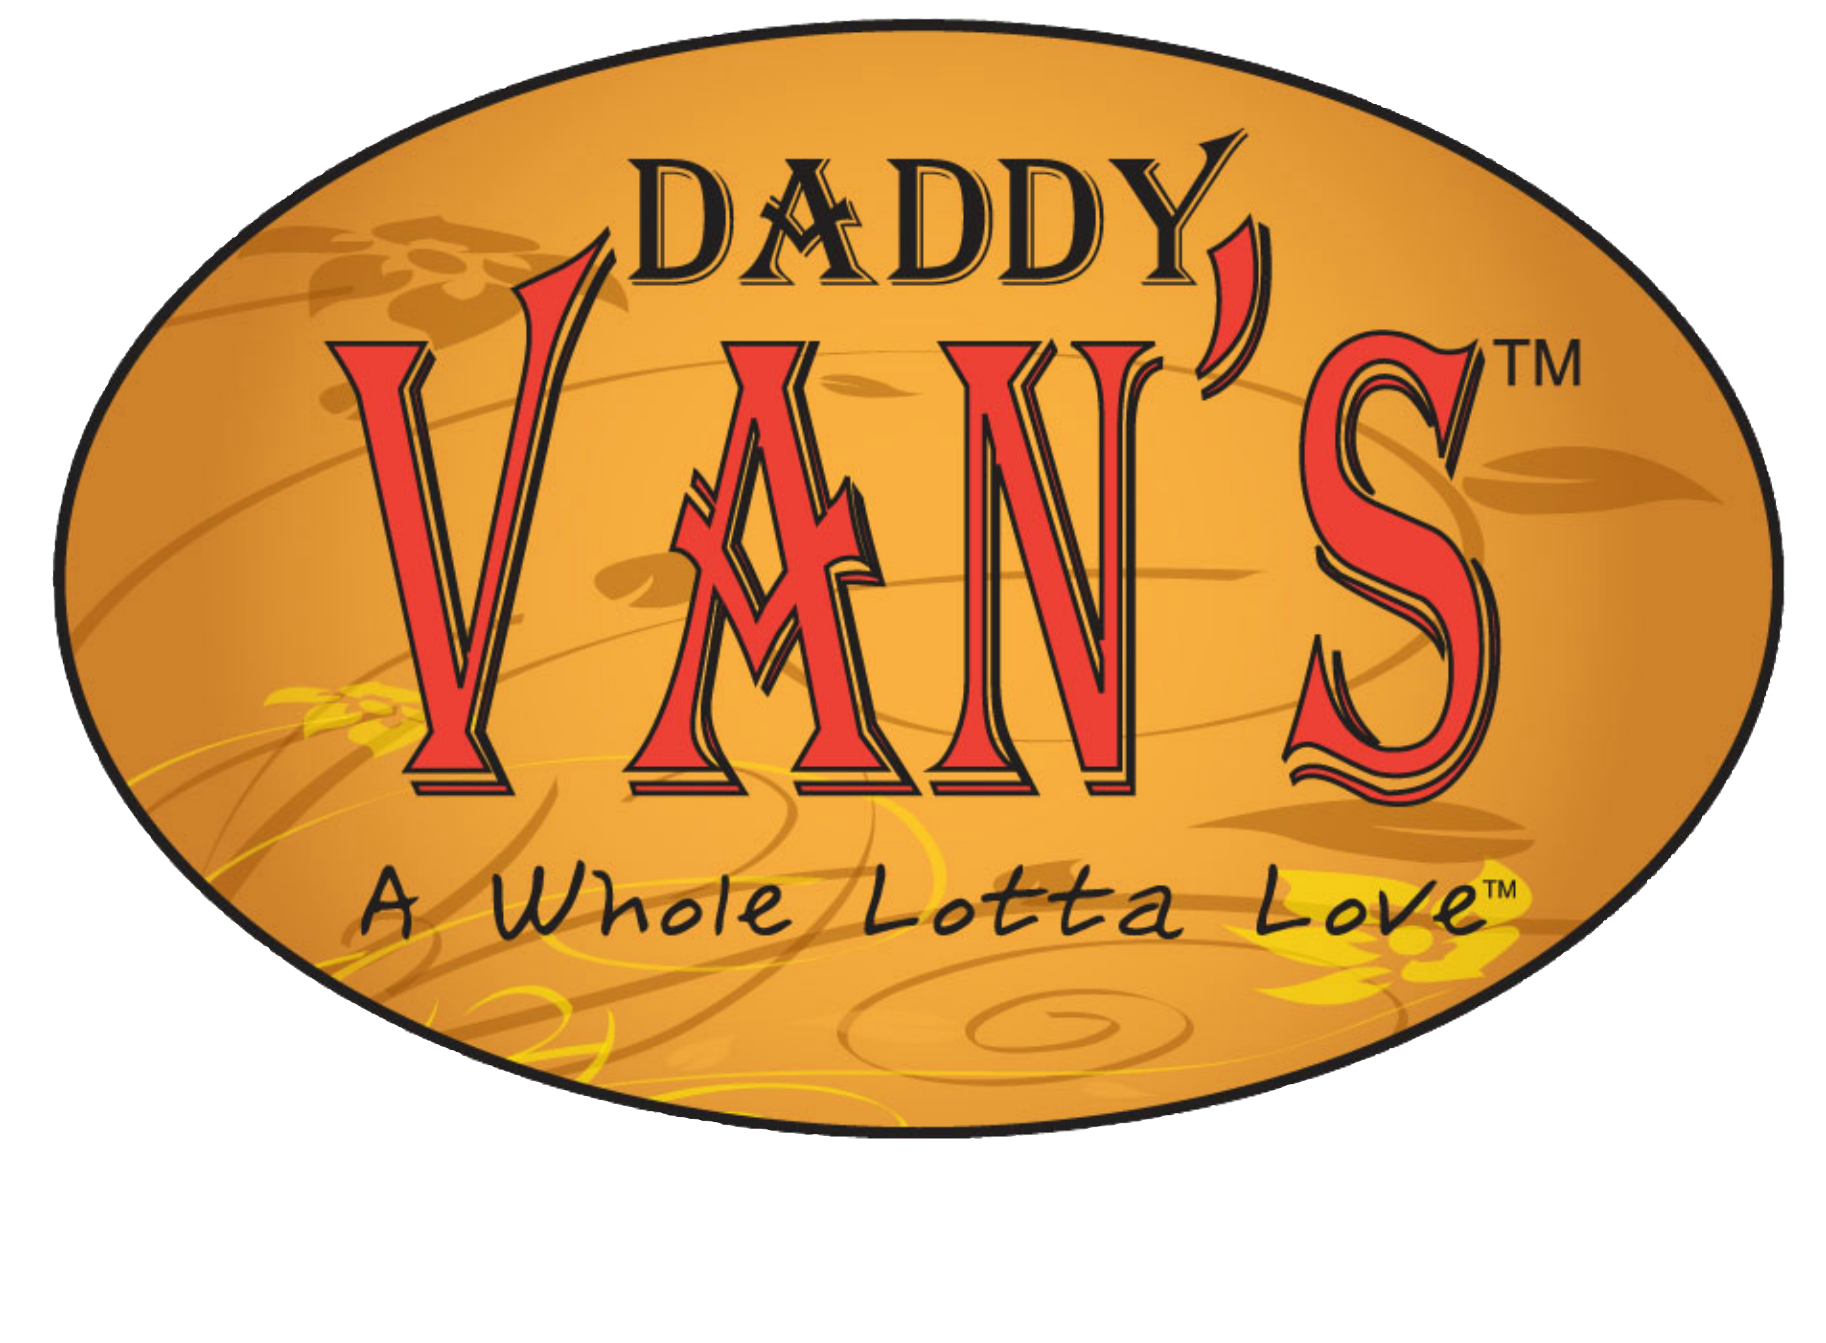 Download daddy. Oz dad логотип. Левел Ван логотип. Daddy logo. Vans logo.